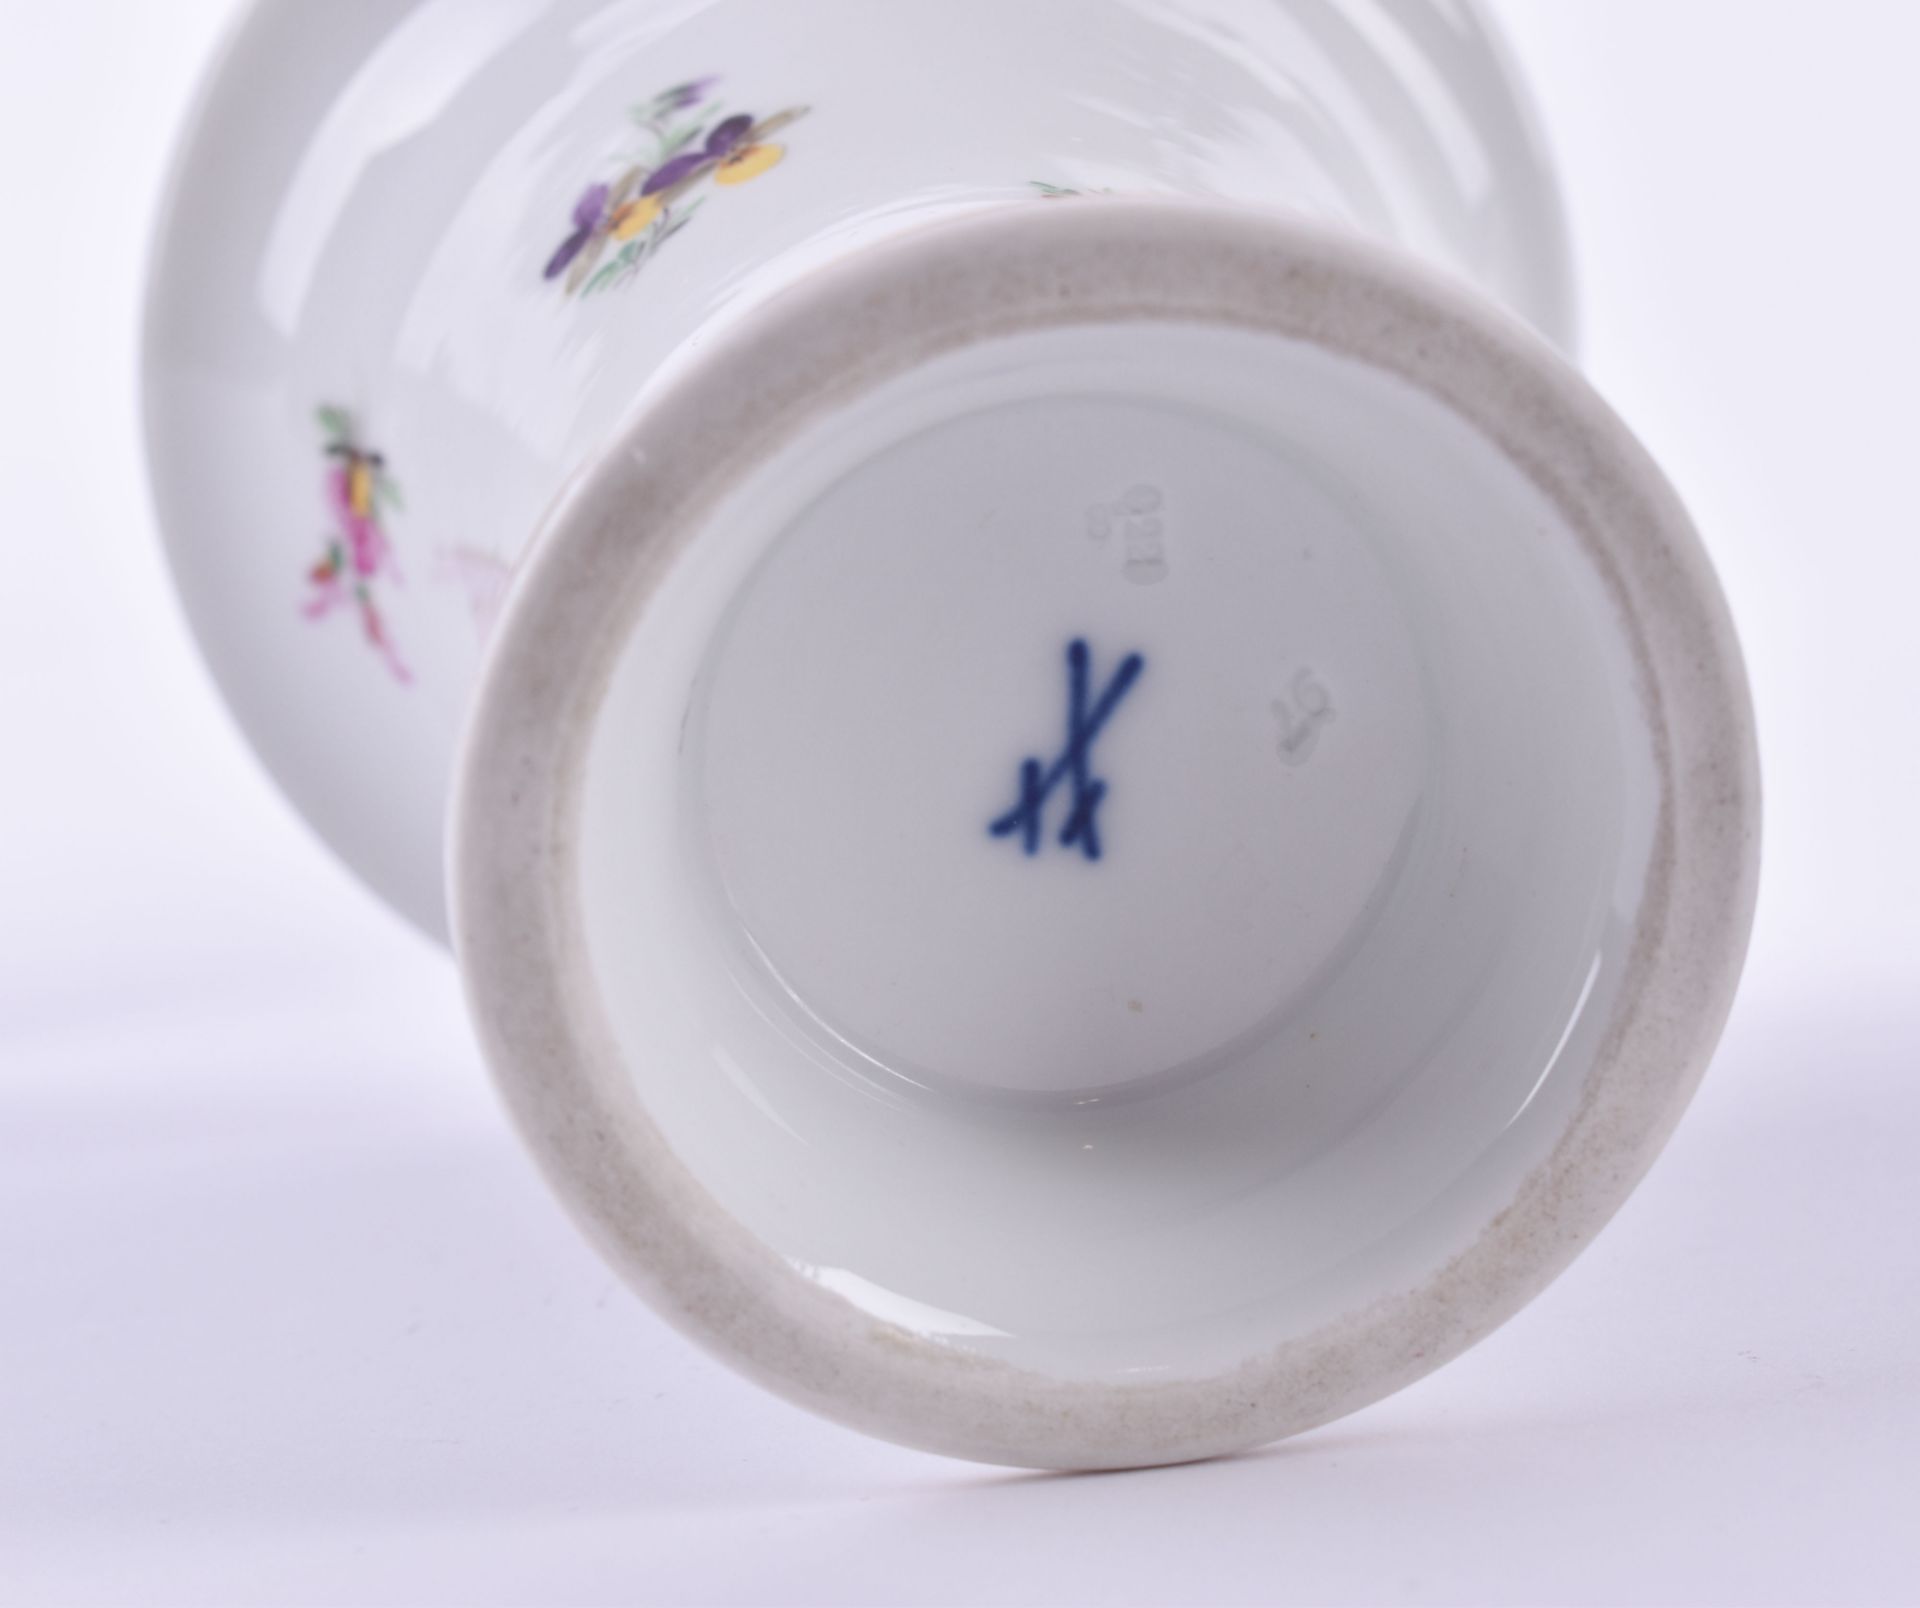  Mug vase Meissen - Image 6 of 6